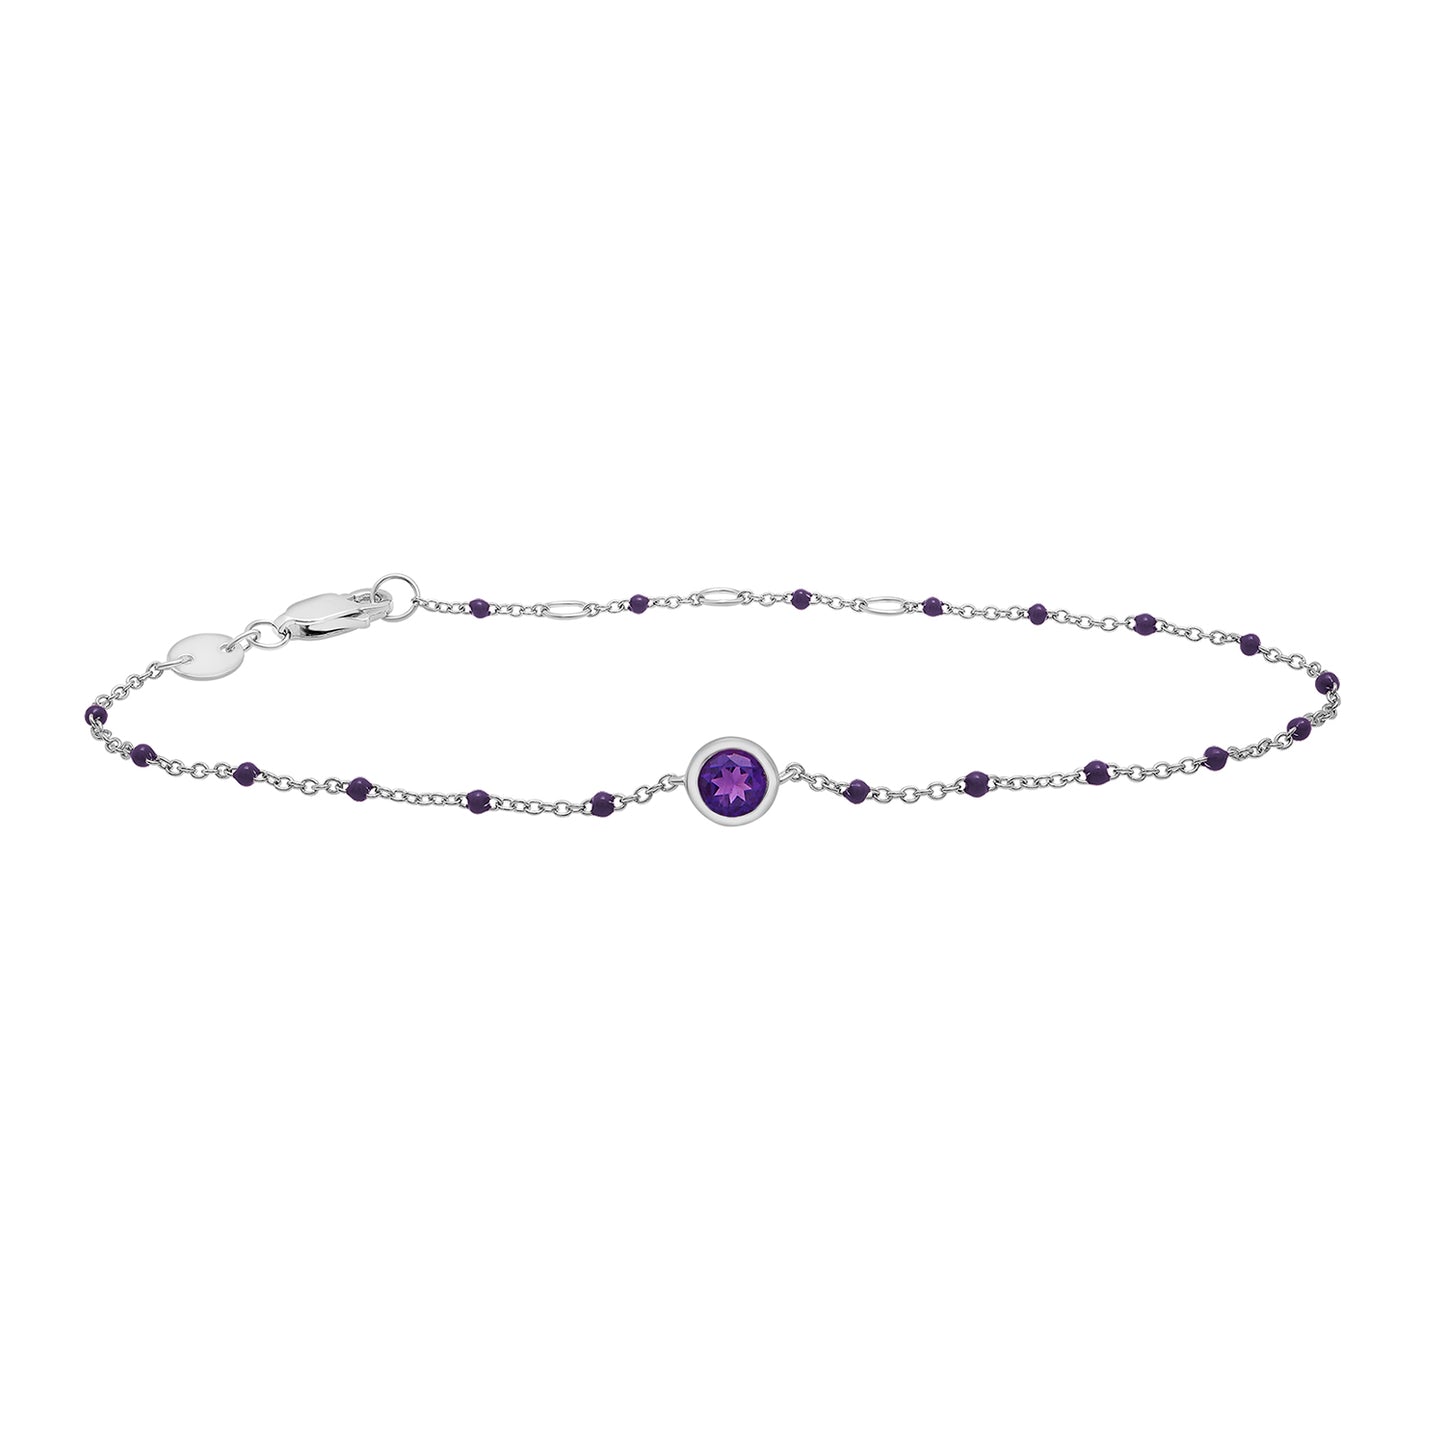 Birthstone Enamel Bracelet in purple color